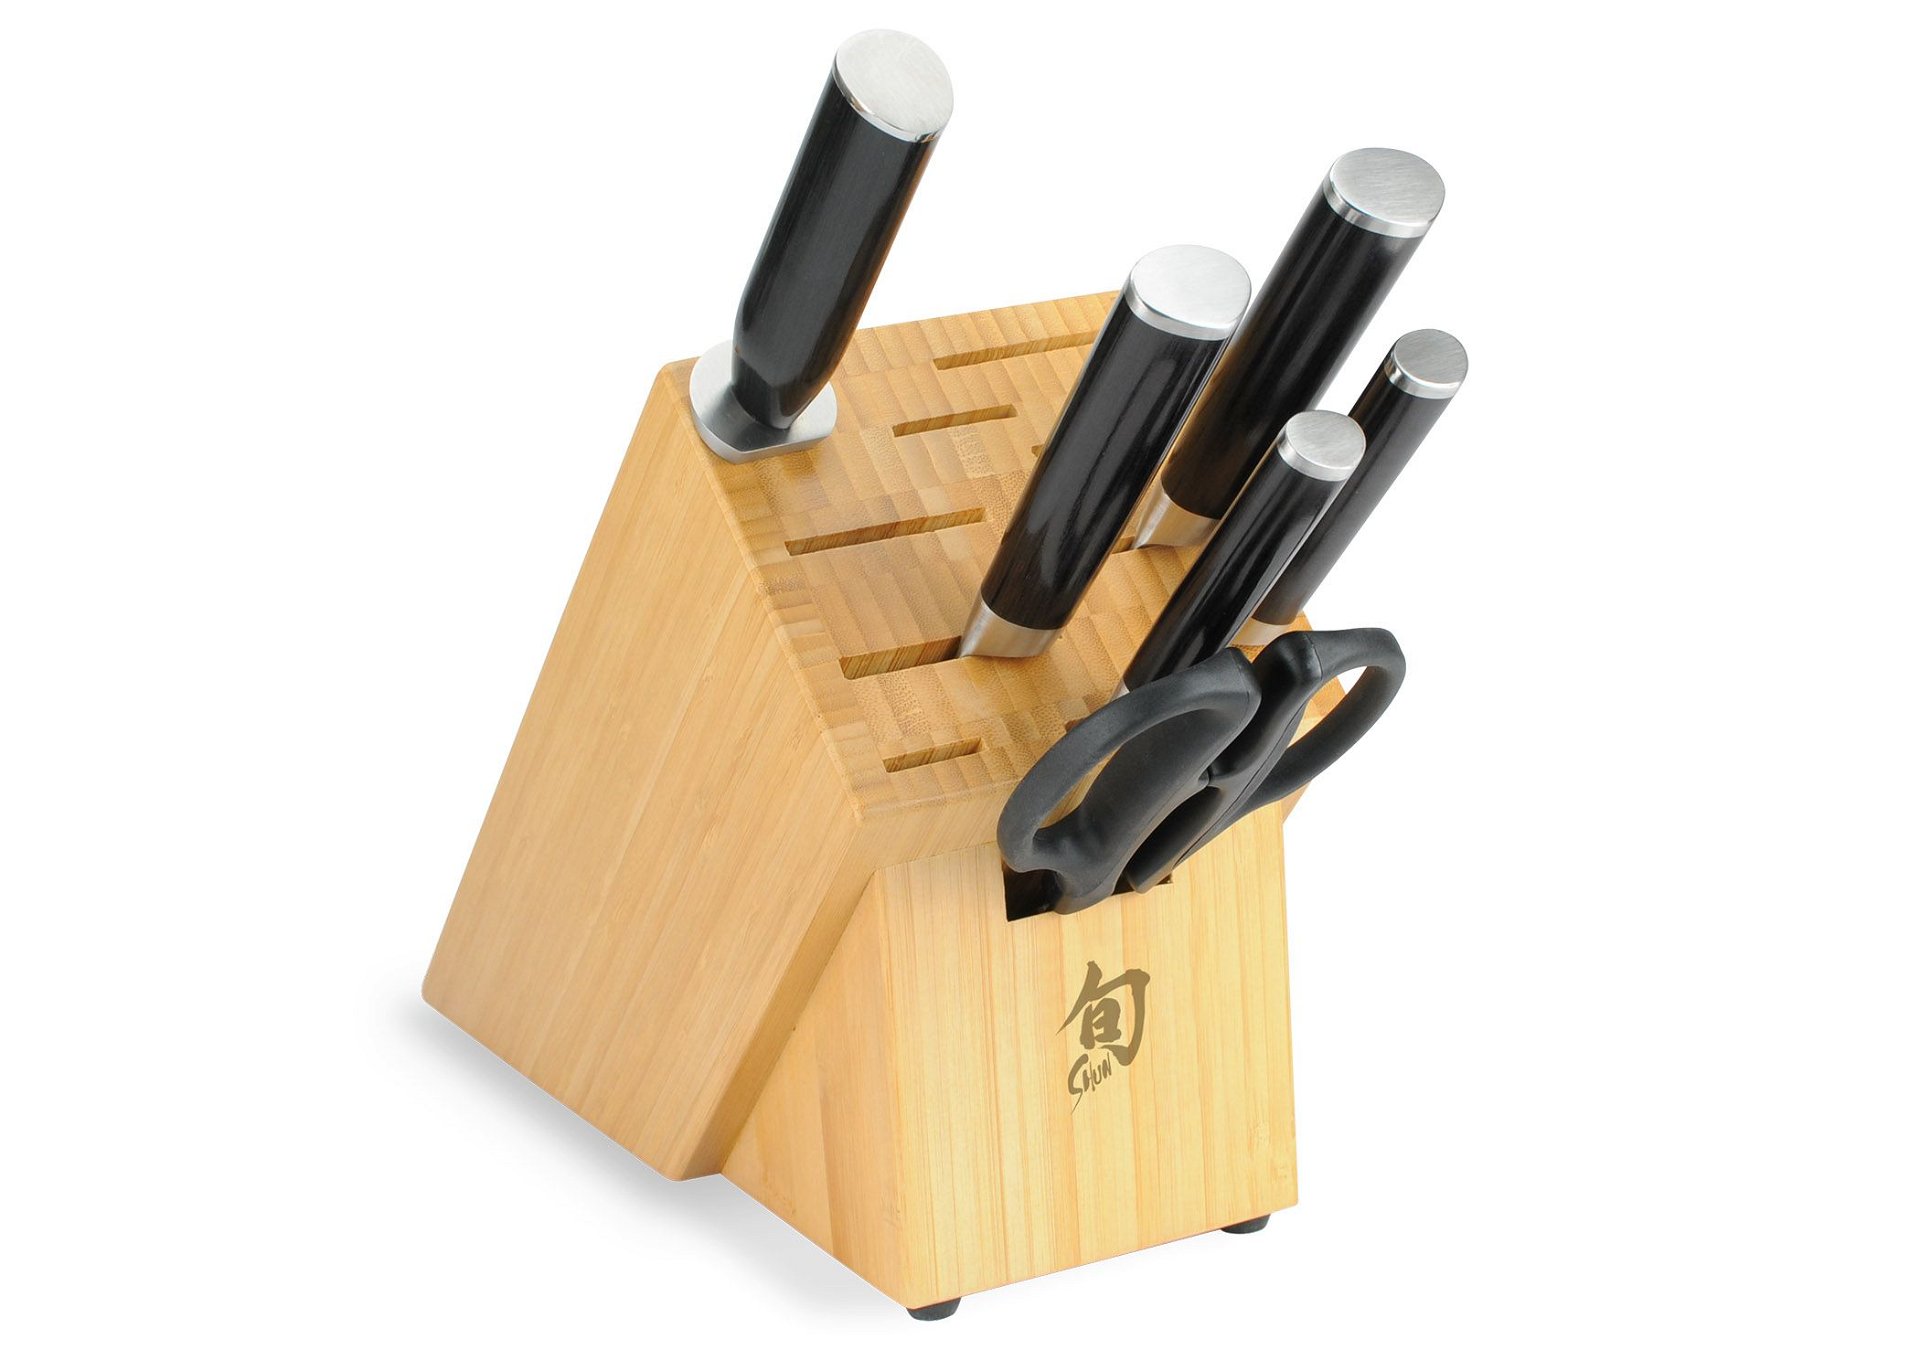 https://cdn.everythingkitchens.com/media/catalog/product/cache/70d878061ea71e5b62358b2b67547186/s/h/shun-cutlery-classic-series-7-piece-knife-block-set-dm2003b.jpg